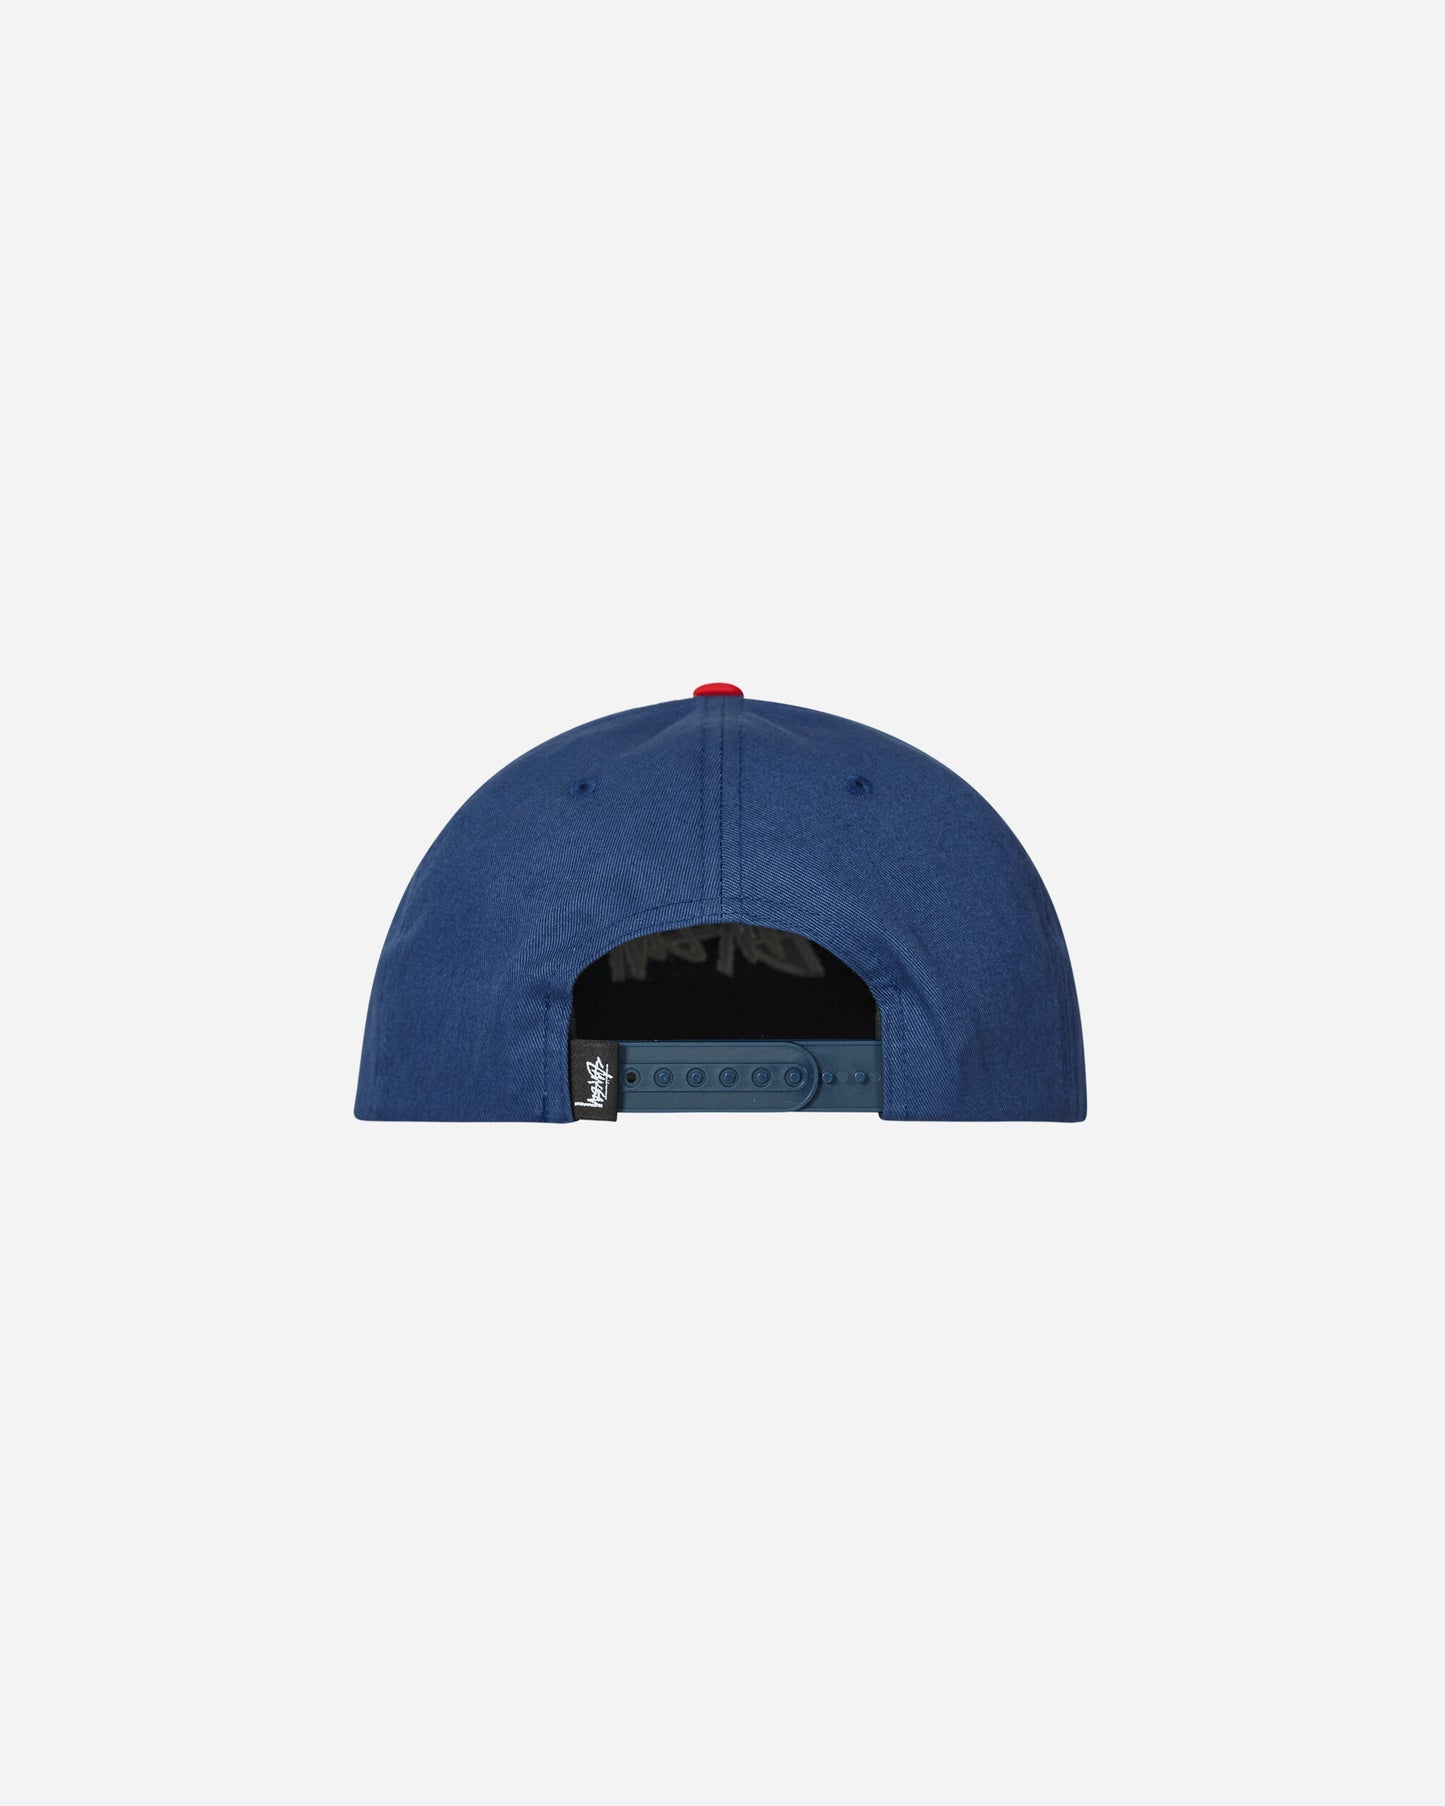 Stüssy Big Stock Cap Navy Hats Caps 1321211 0806